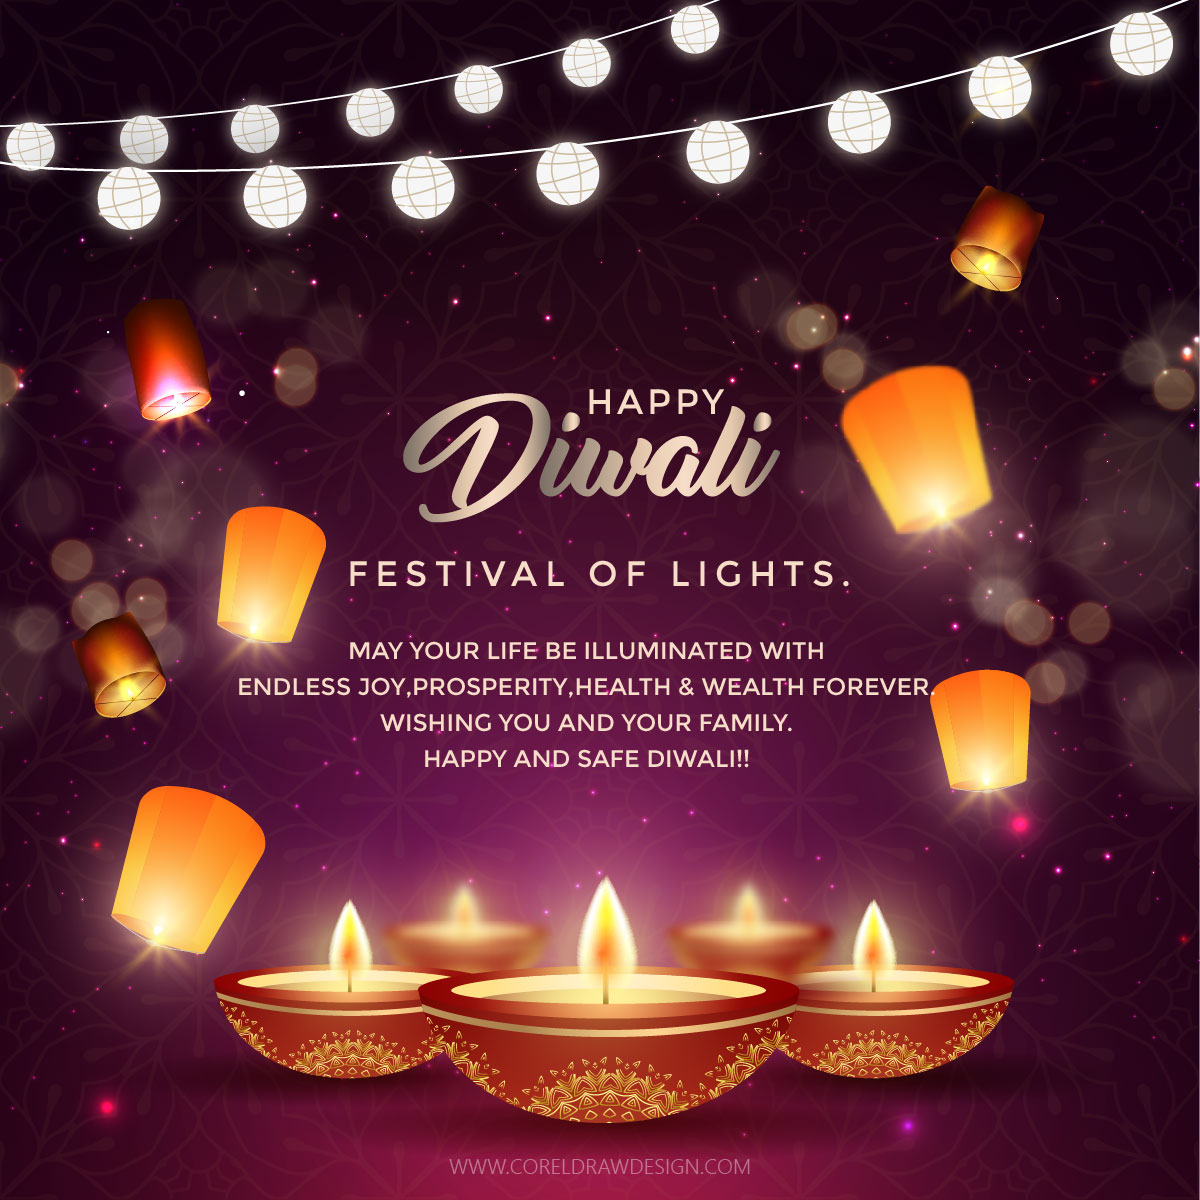 Download Festive Happy Diwali Wishes Greeting Card | CorelDraw ...